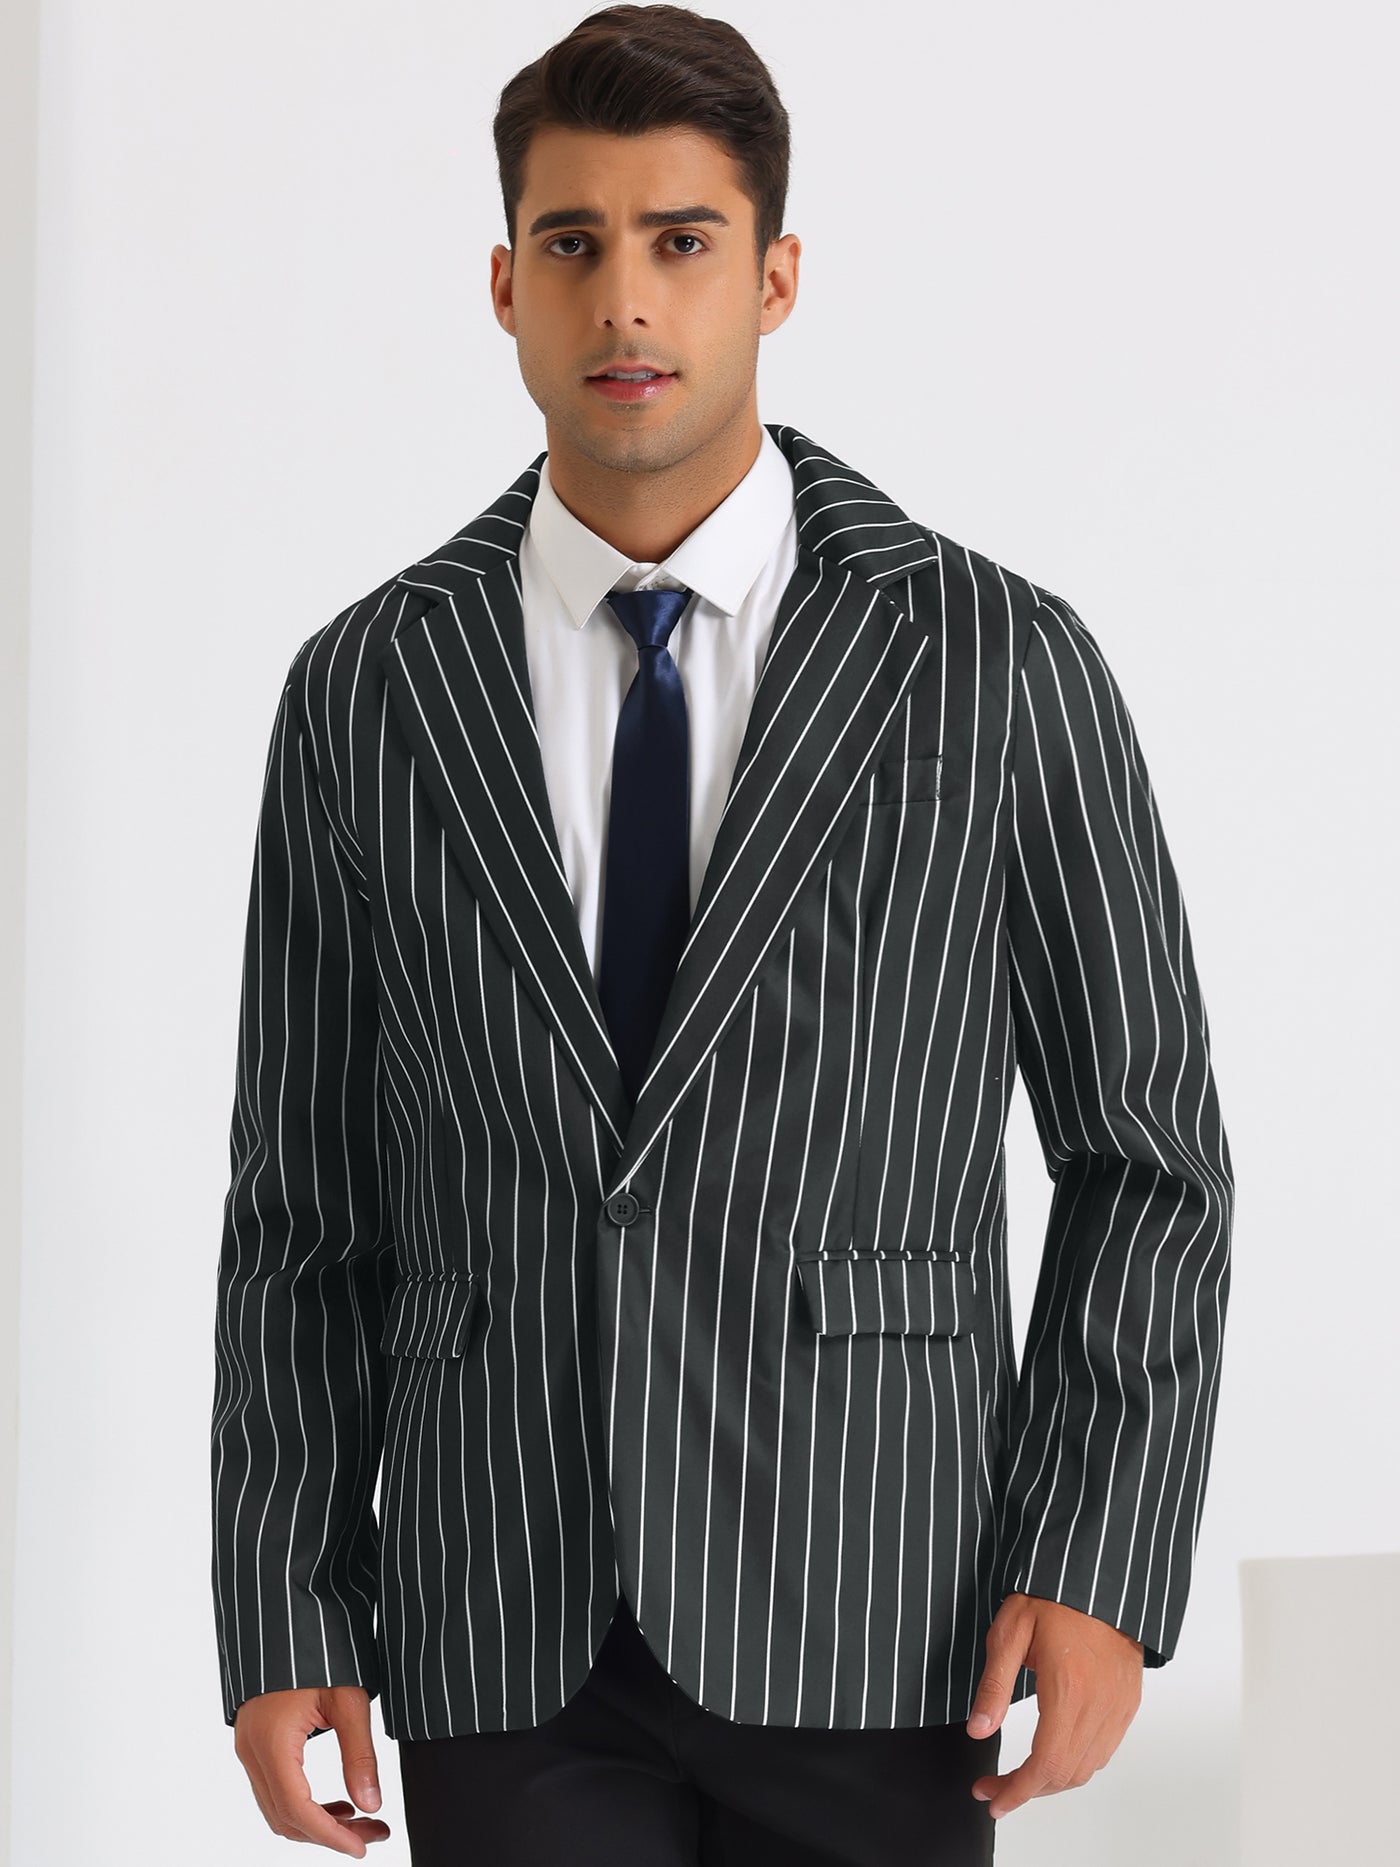 Bublédon Stripes Blazers for Men's Slim Fit Single Breasted Business Color Block Sports Coat